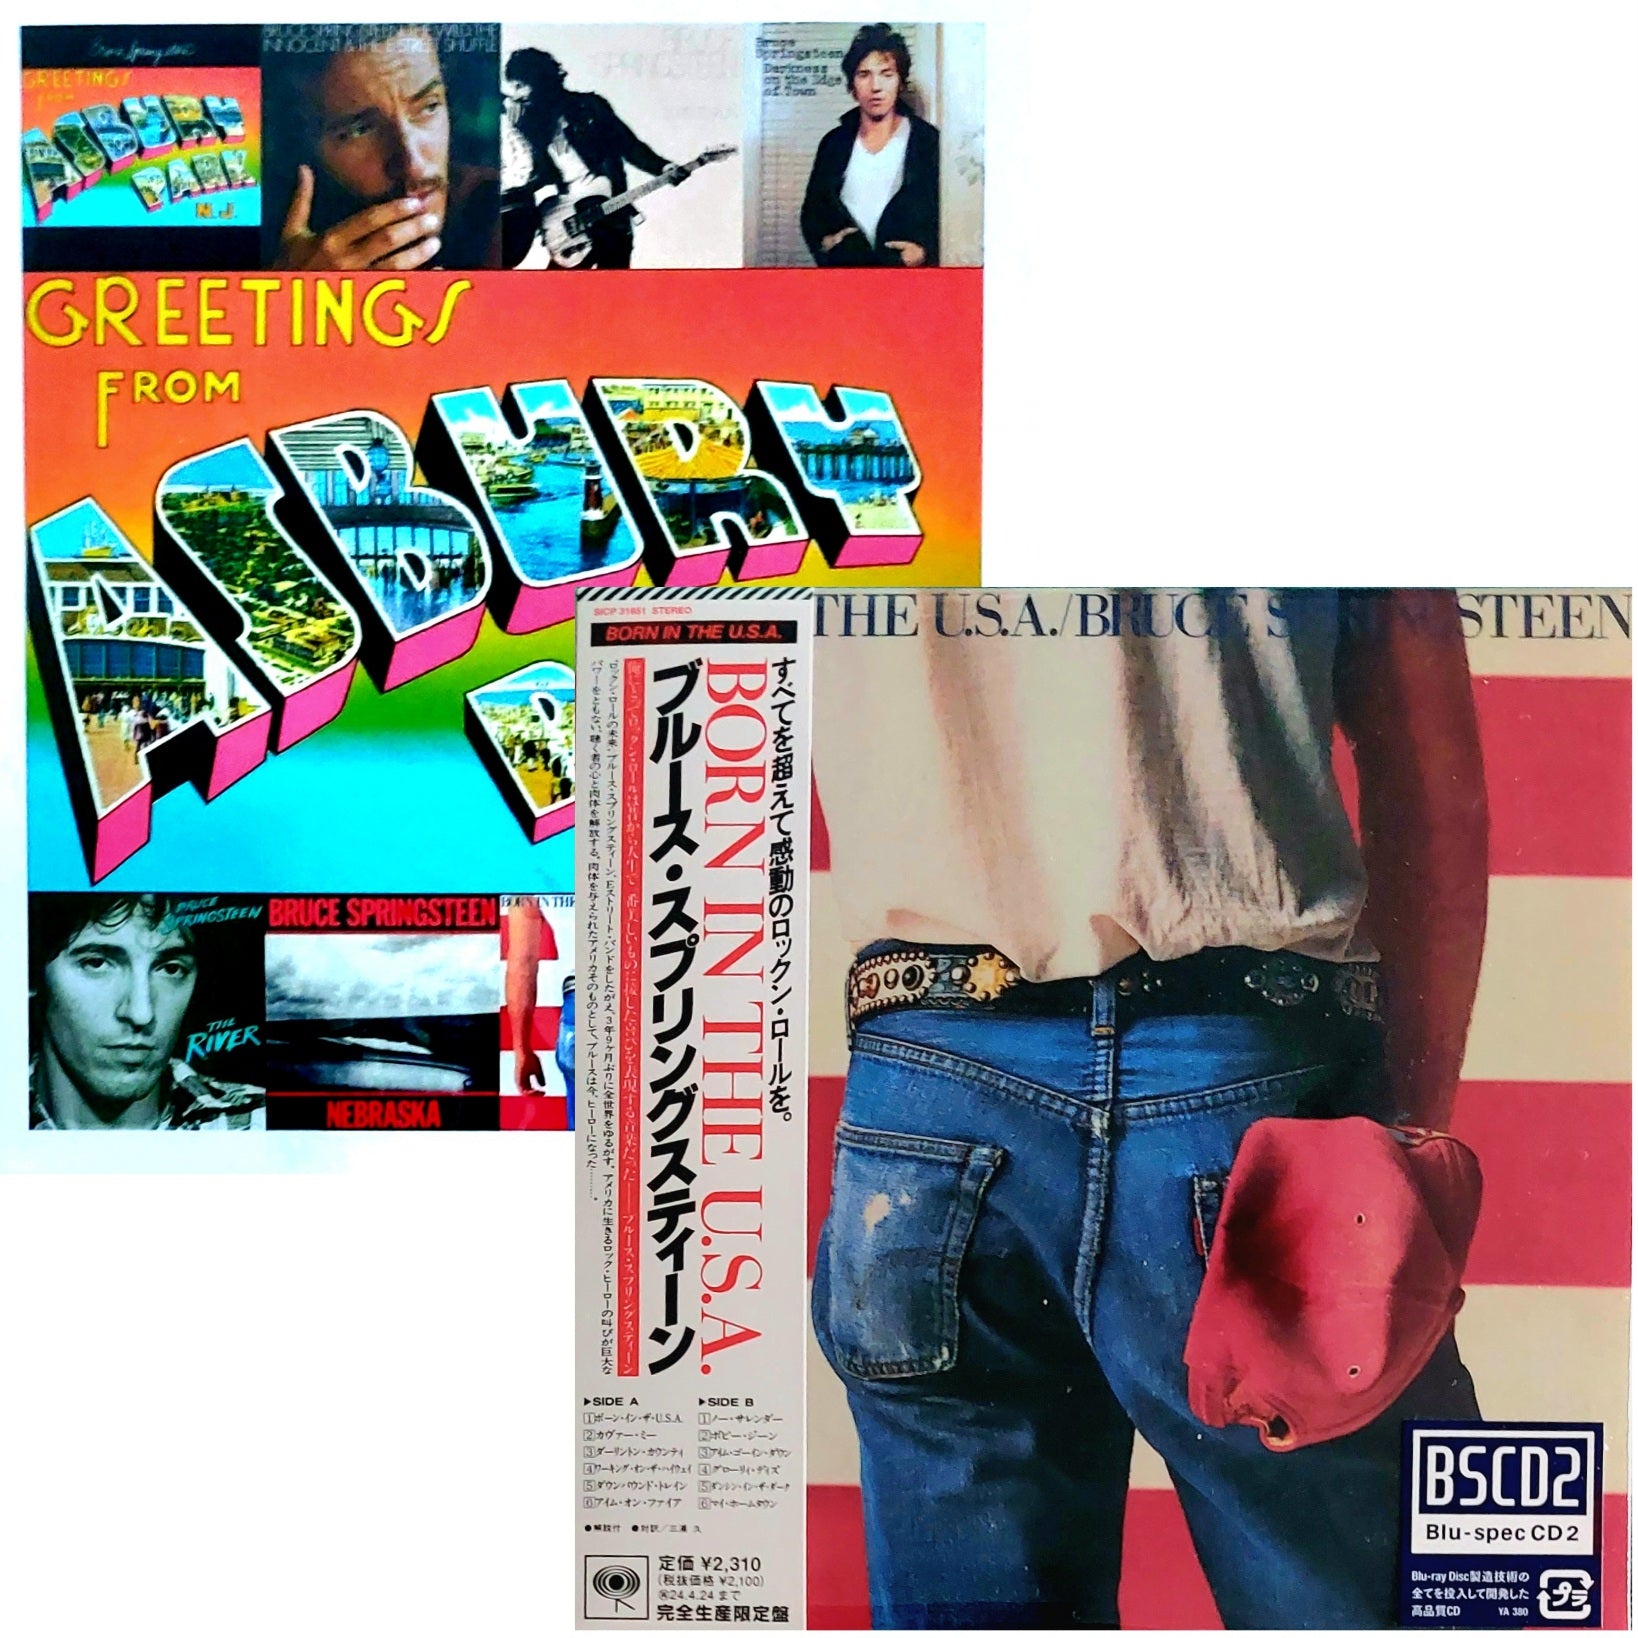 Bruce_Springsteen_Born_In_USA_Japanese_Blu-spec_CD2_CD_Album_and_Postcard